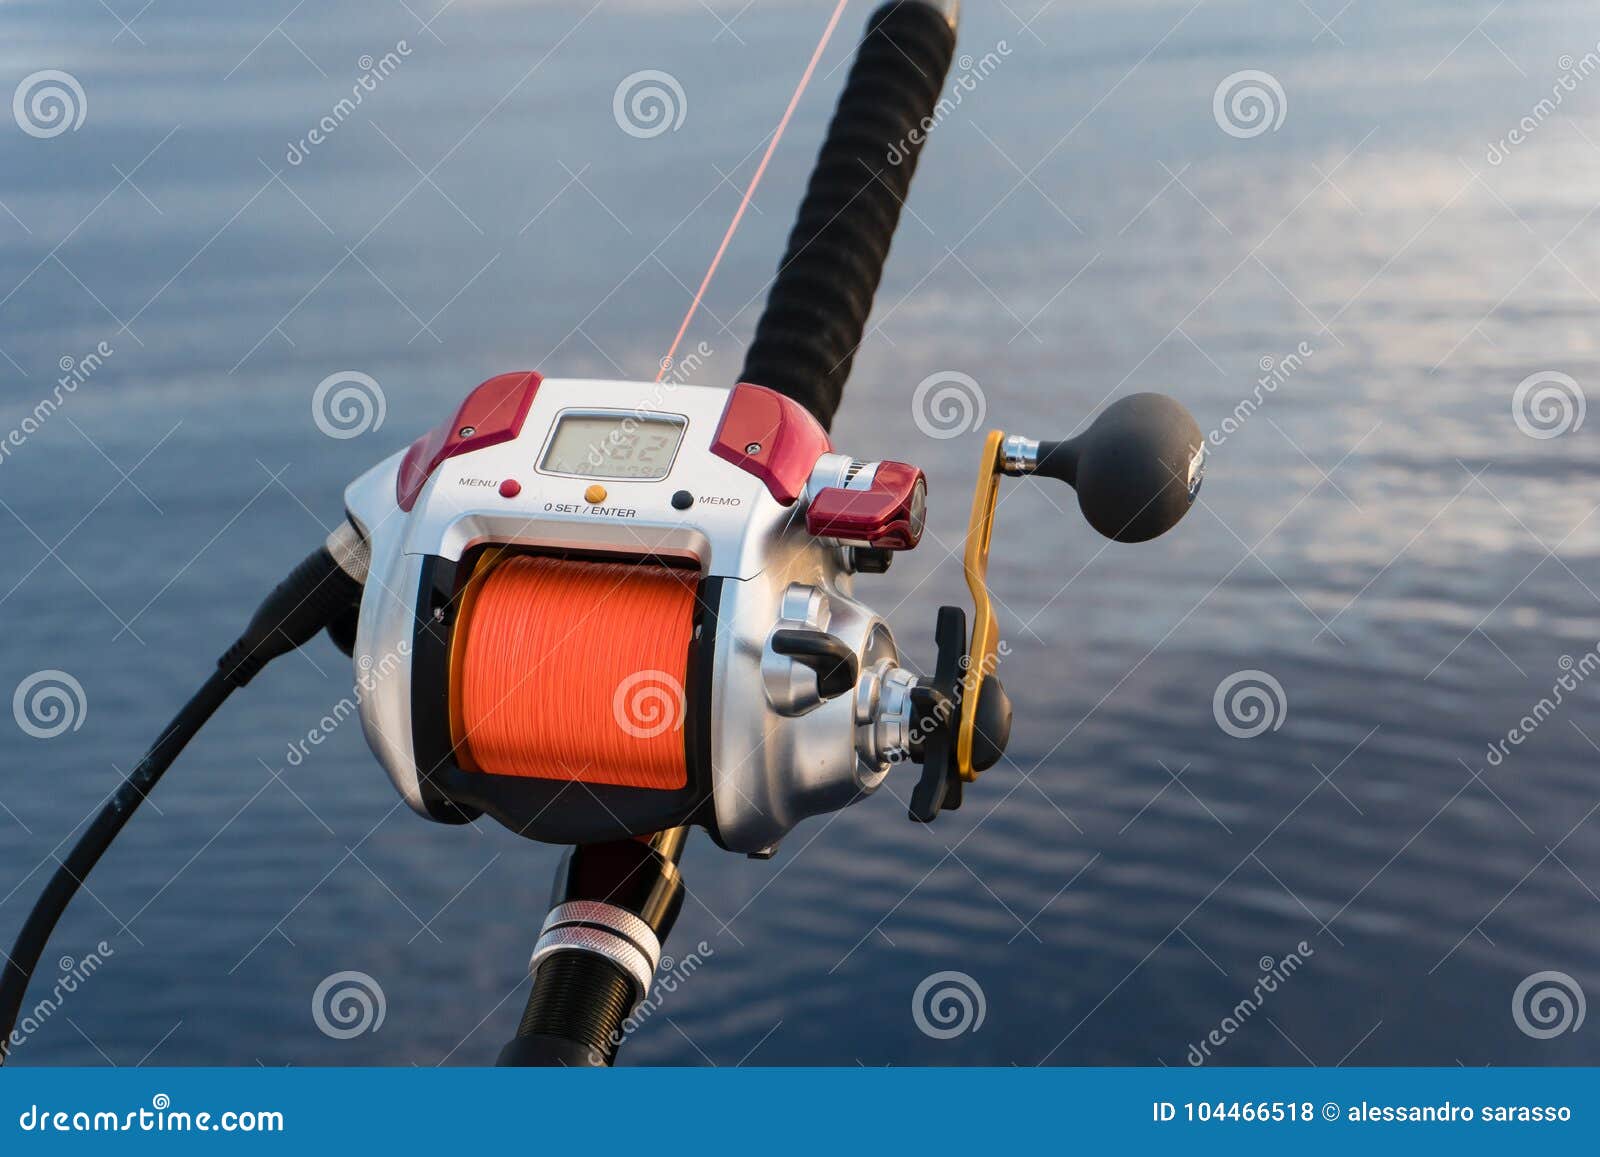 https://thumbs.dreamstime.com/z/electric-fishing-reel-mounted-rod-sea-backgroun-electric-fishing-reel-mounted-rod-sea-background-104466518.jpg